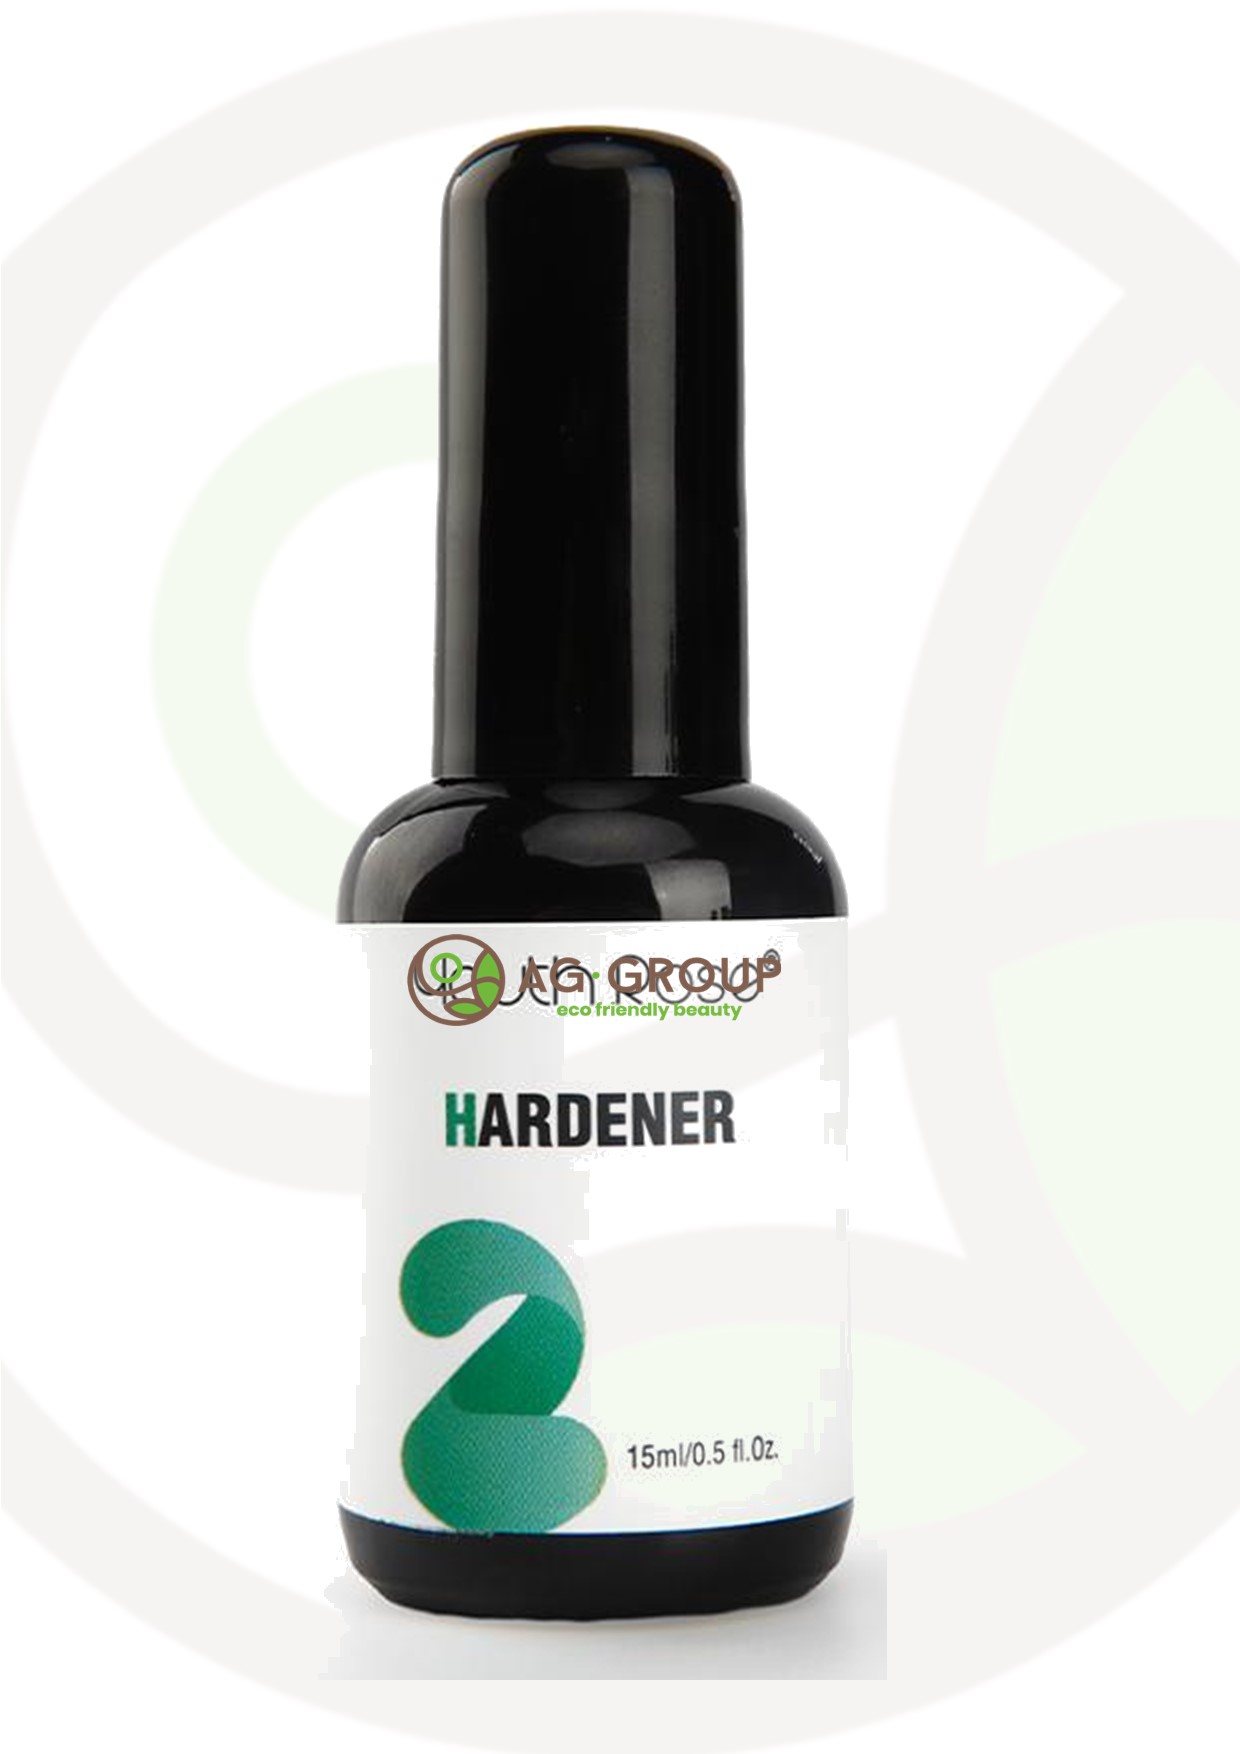 Featured image for “Hardener per gel polish soak-off led/uv”